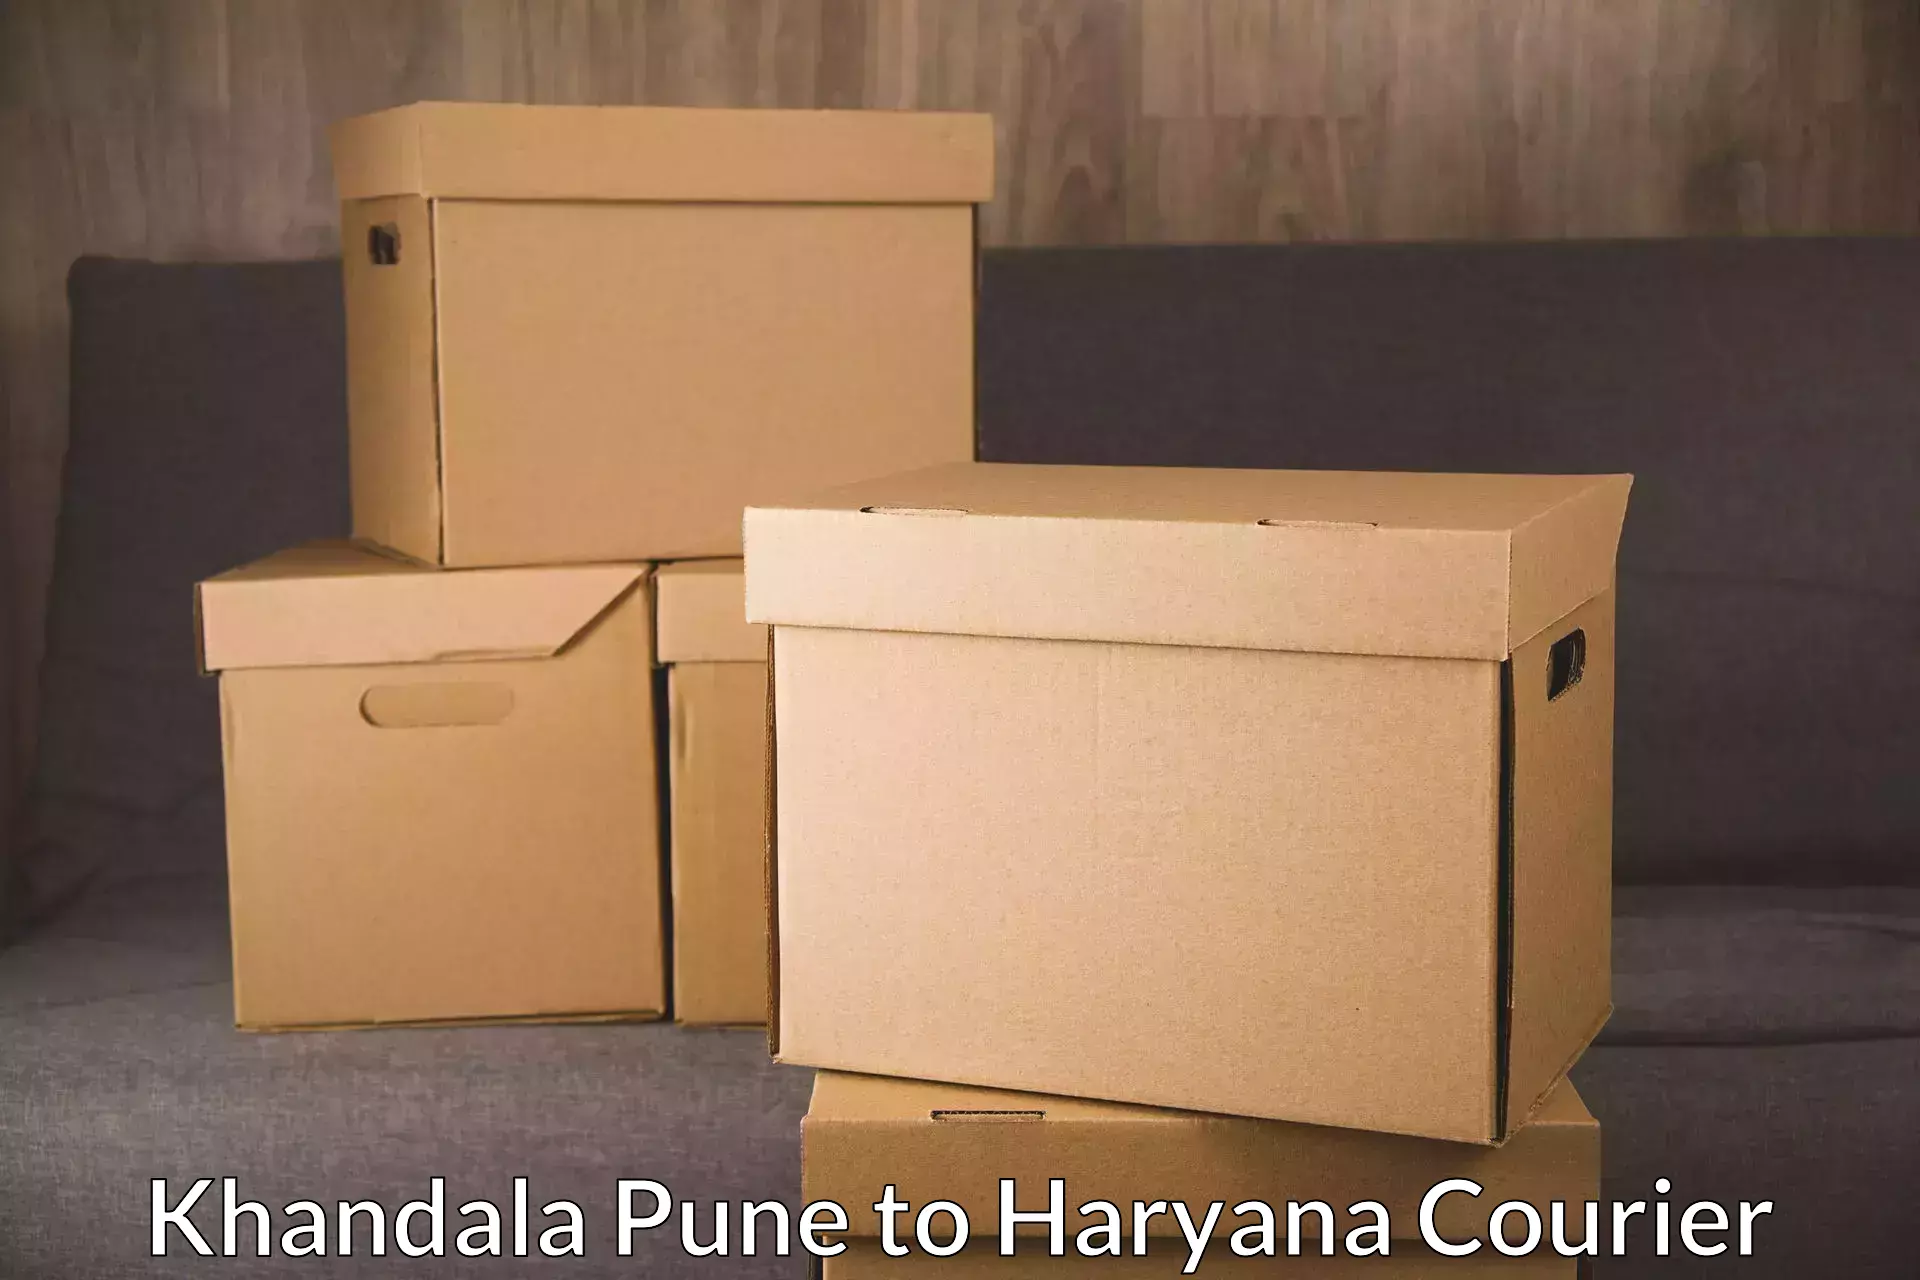 On-demand courier Khandala Pune to NCR Haryana